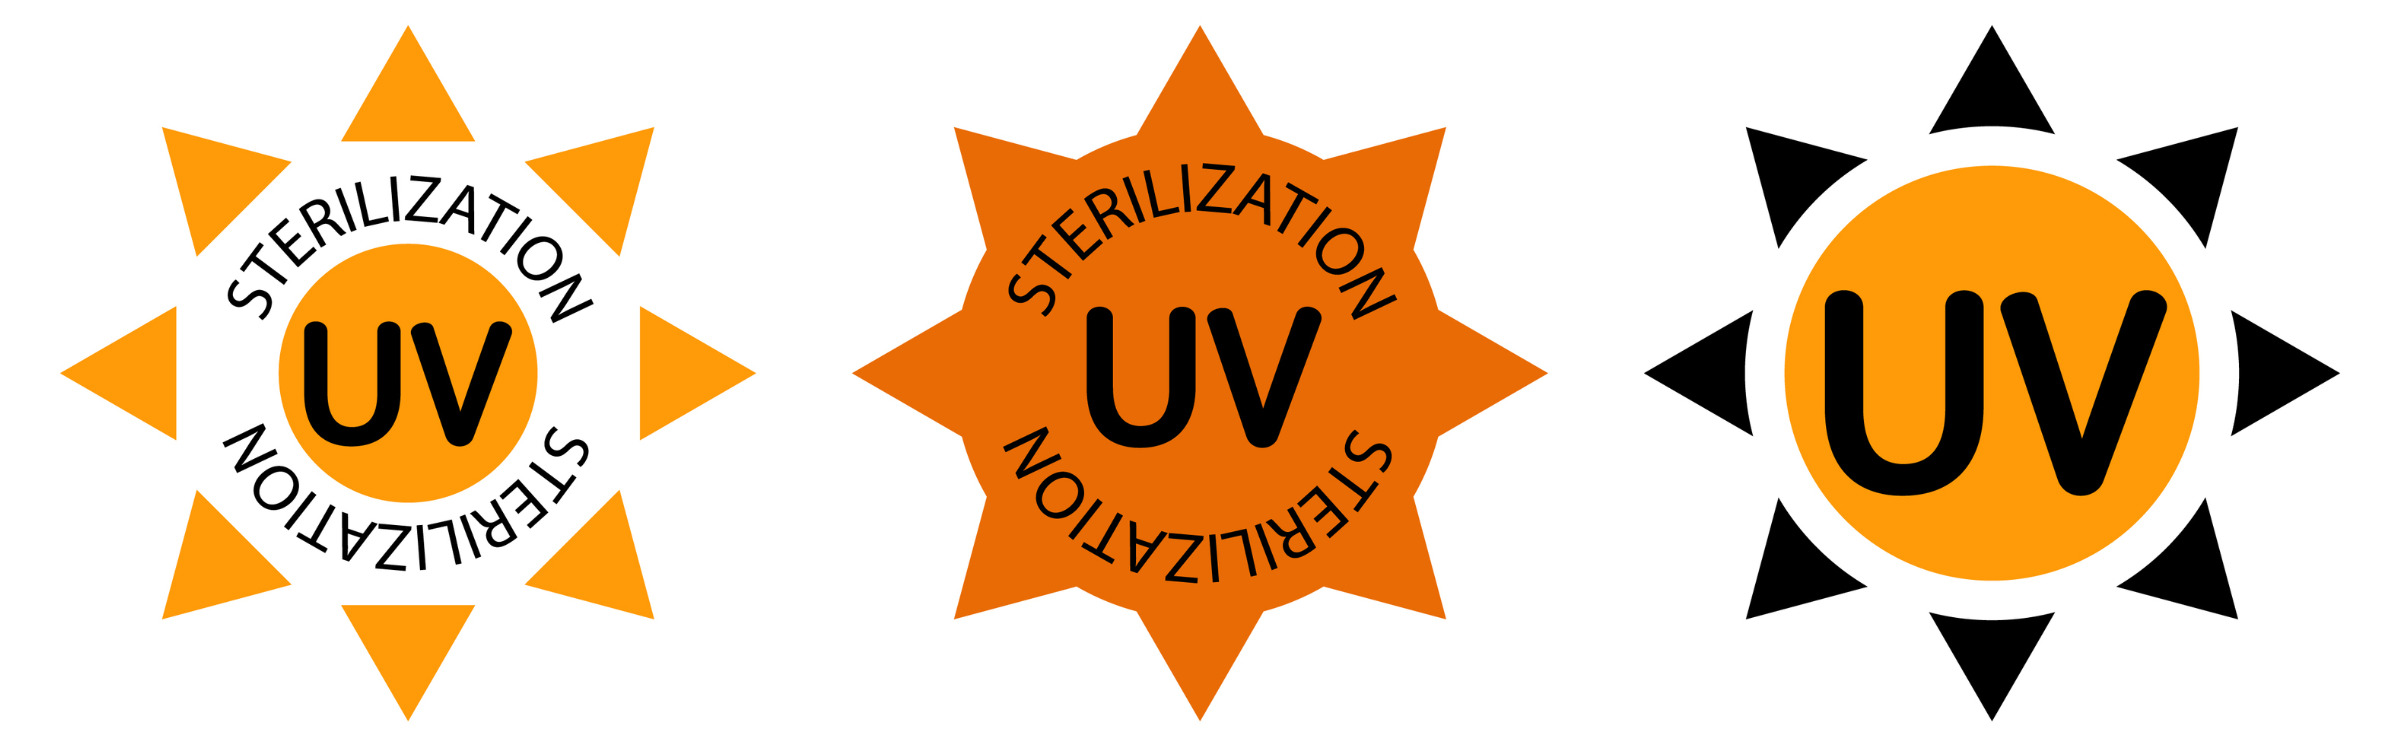 Using UV Light for Sterilization